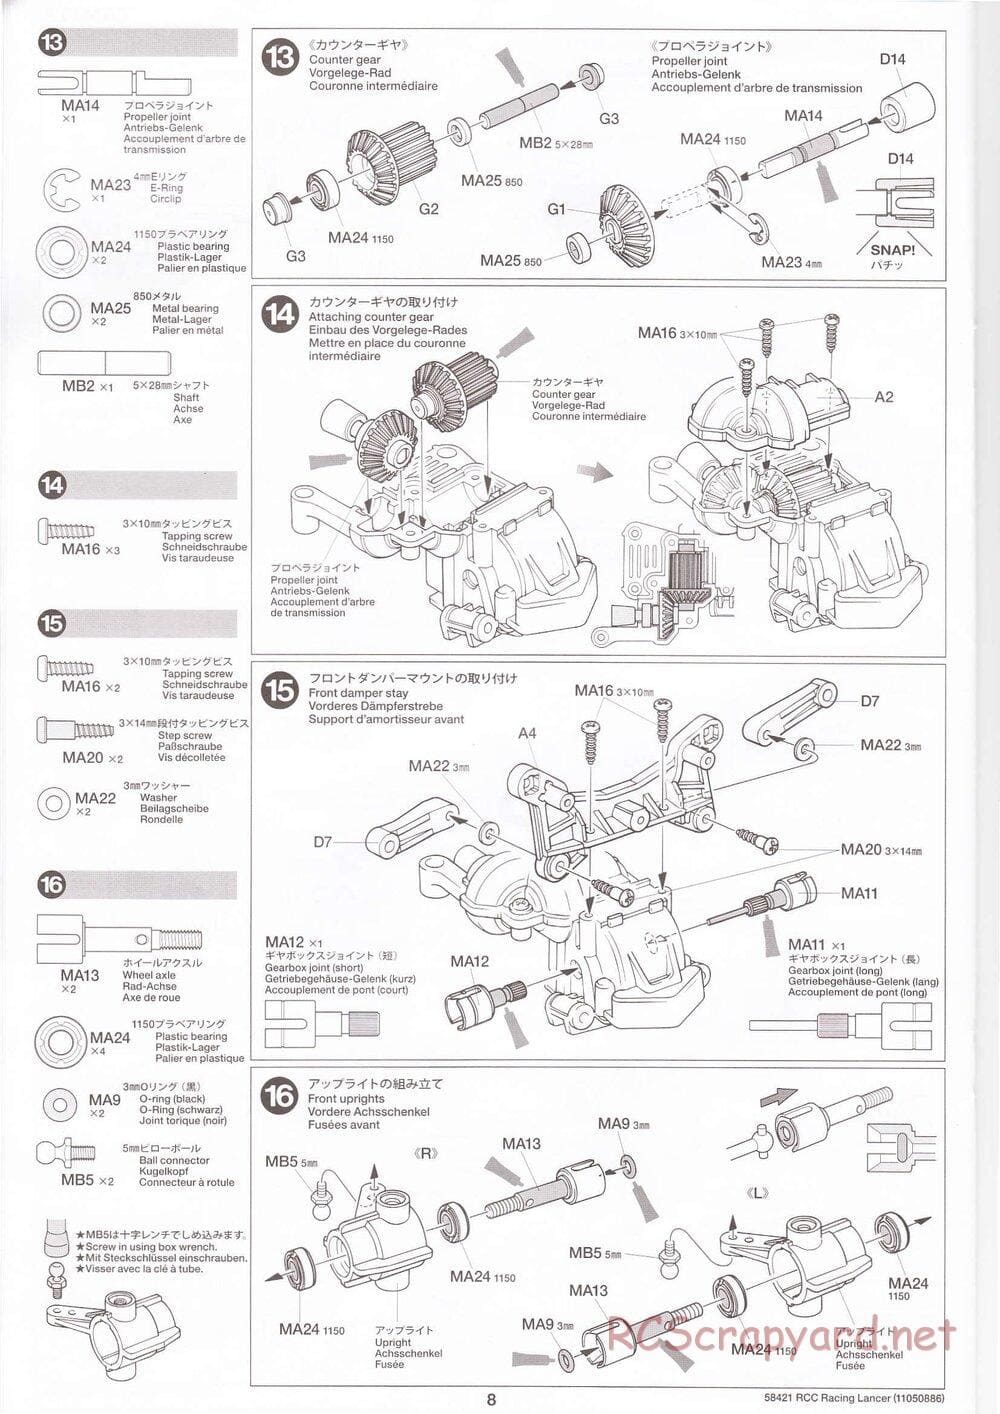 Tamiya - Mitsubishi Racing Lancer - DF-01 Chassis - Manual - Page 8